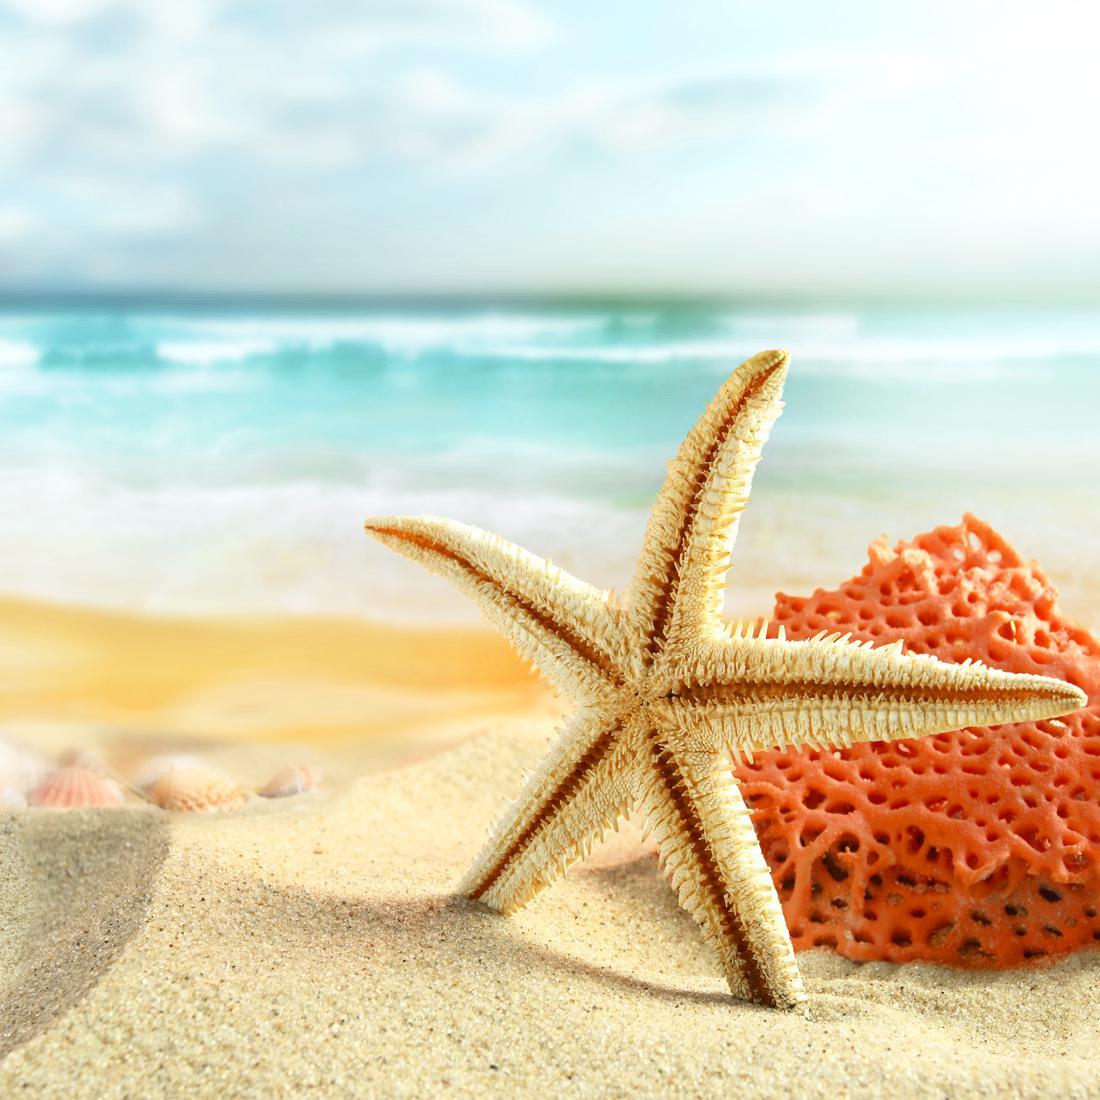 Starfish and Coral on Beach, Original (Square) - wallart-australia - Canvas